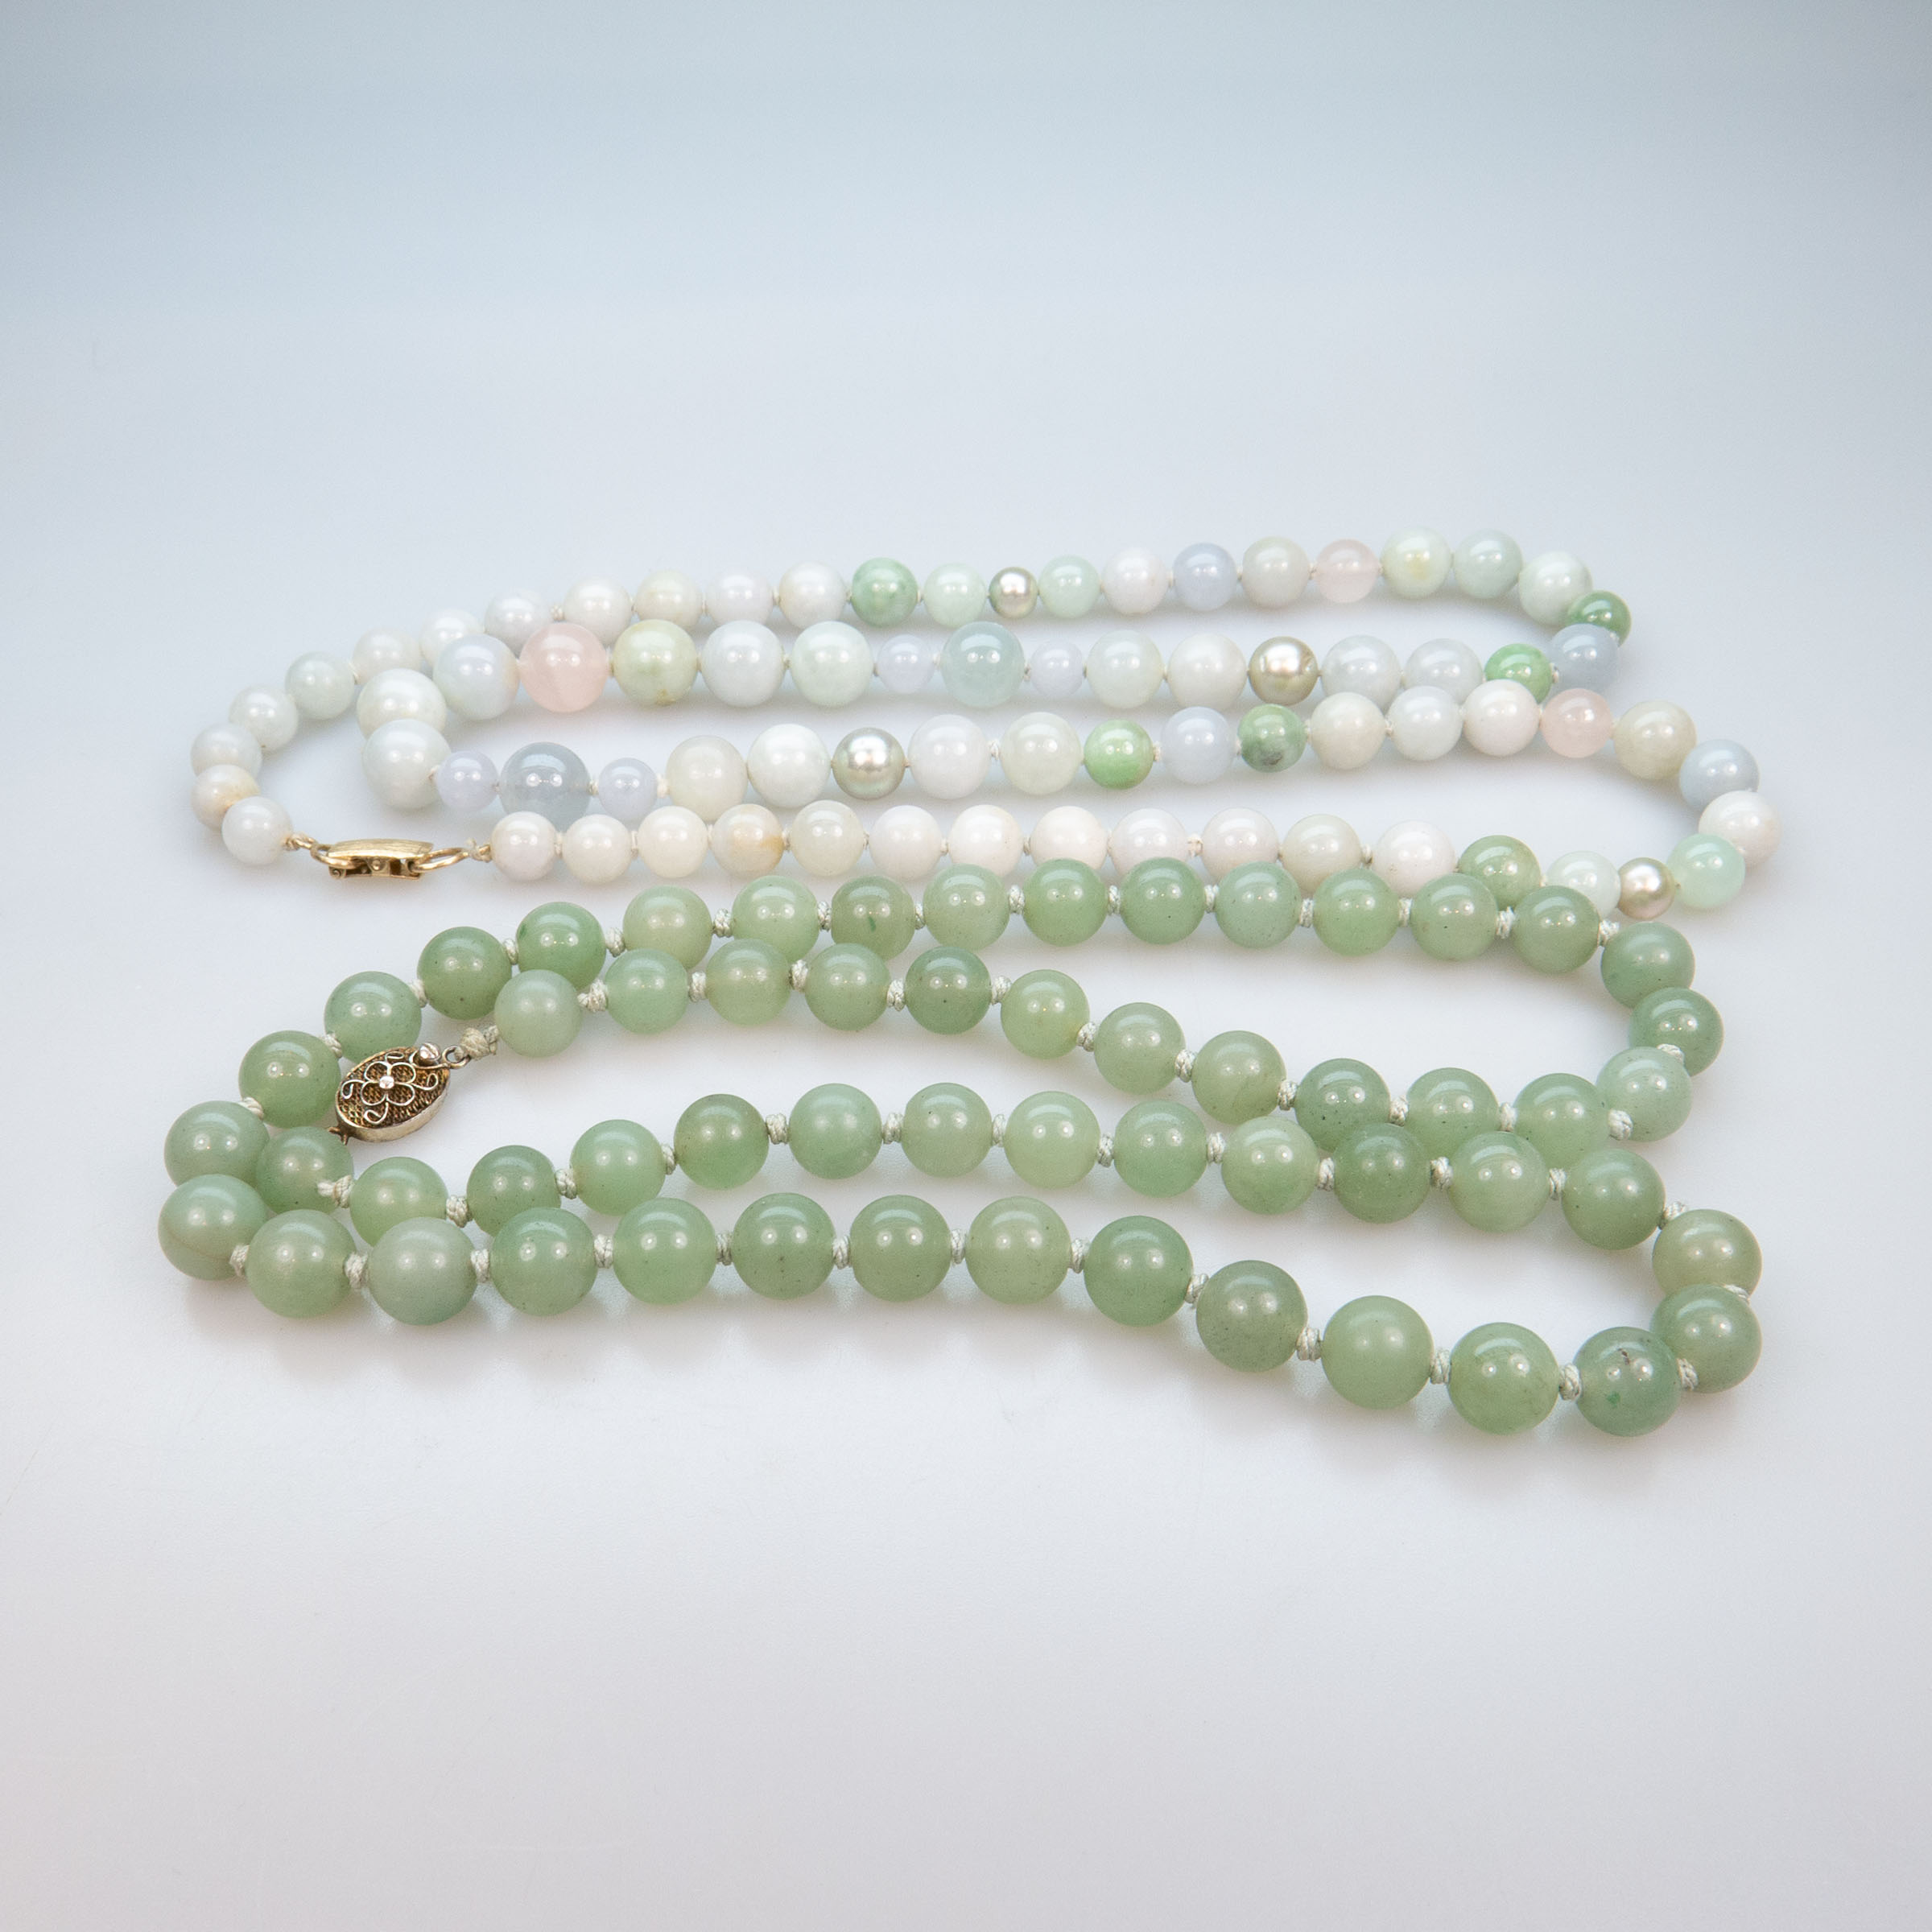 2 Single Strand Jade Bead Necklaces